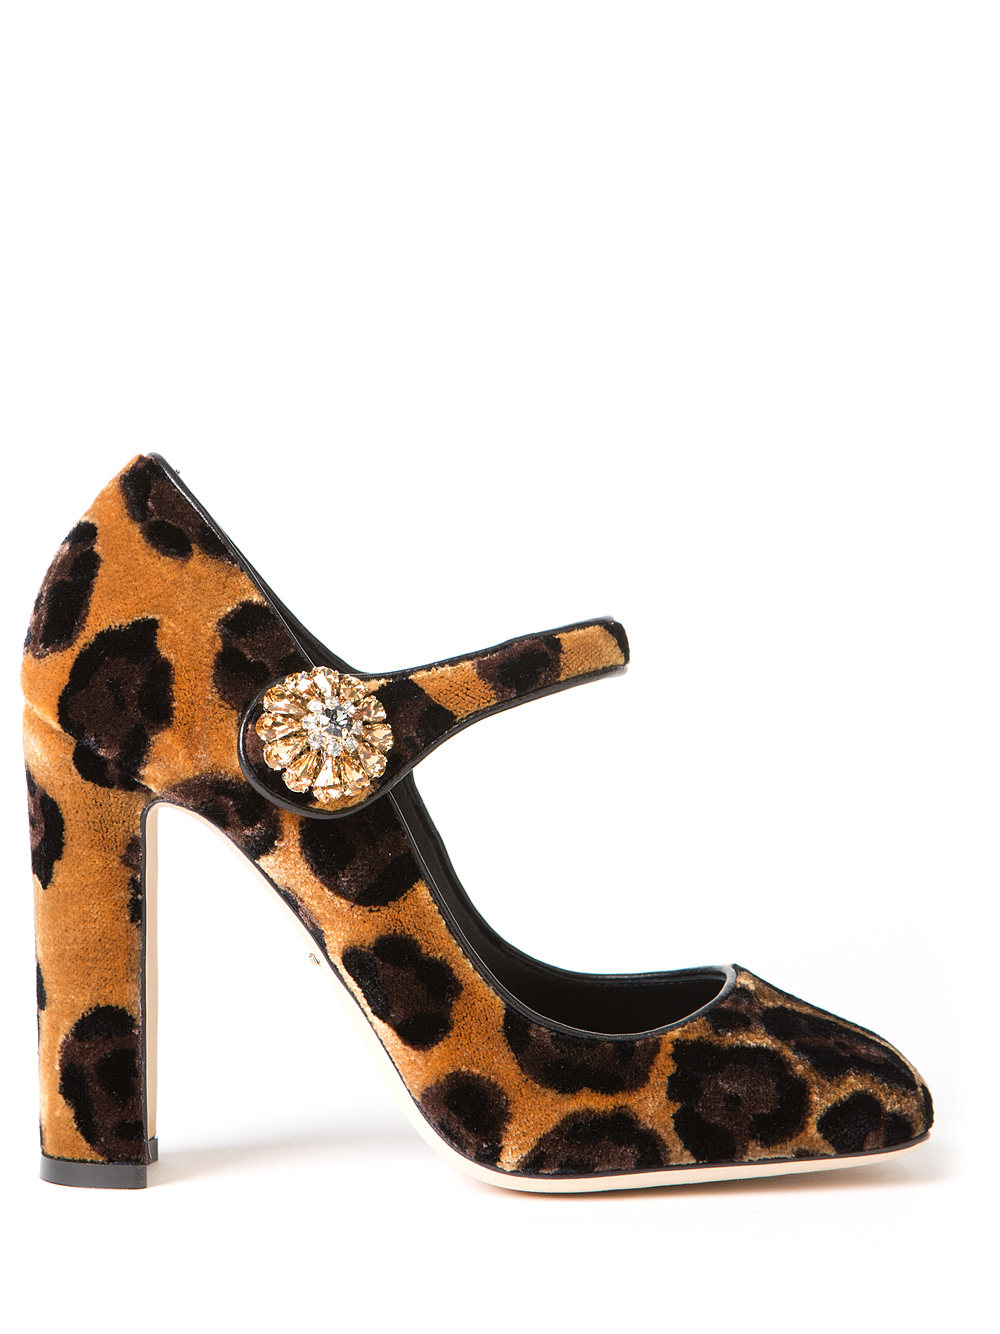 Lyst - Dolce & Gabbana Leopard Velvet Mary Jane Pumps in Brown